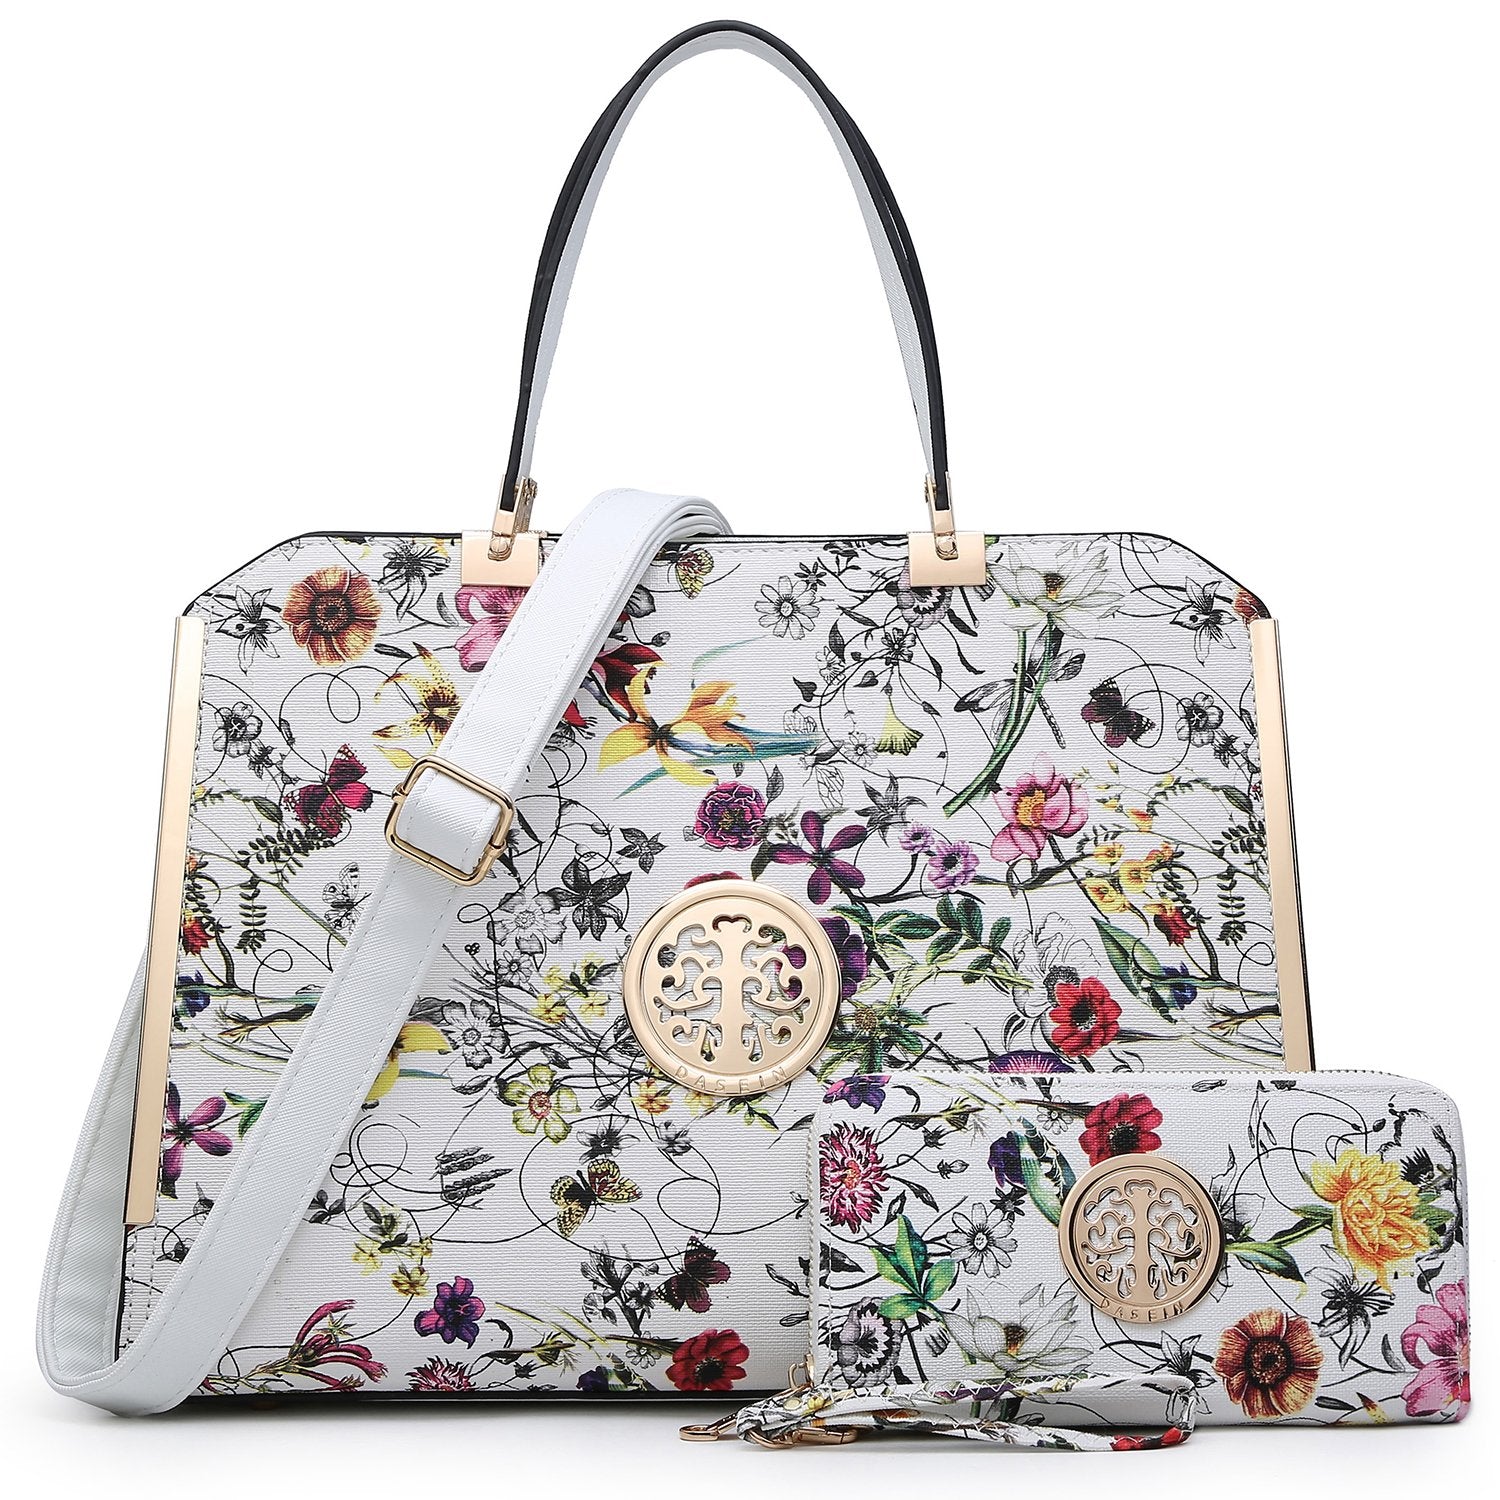 Dolce & Gabbana Sicily small floral-print textured-leather shoulder bag